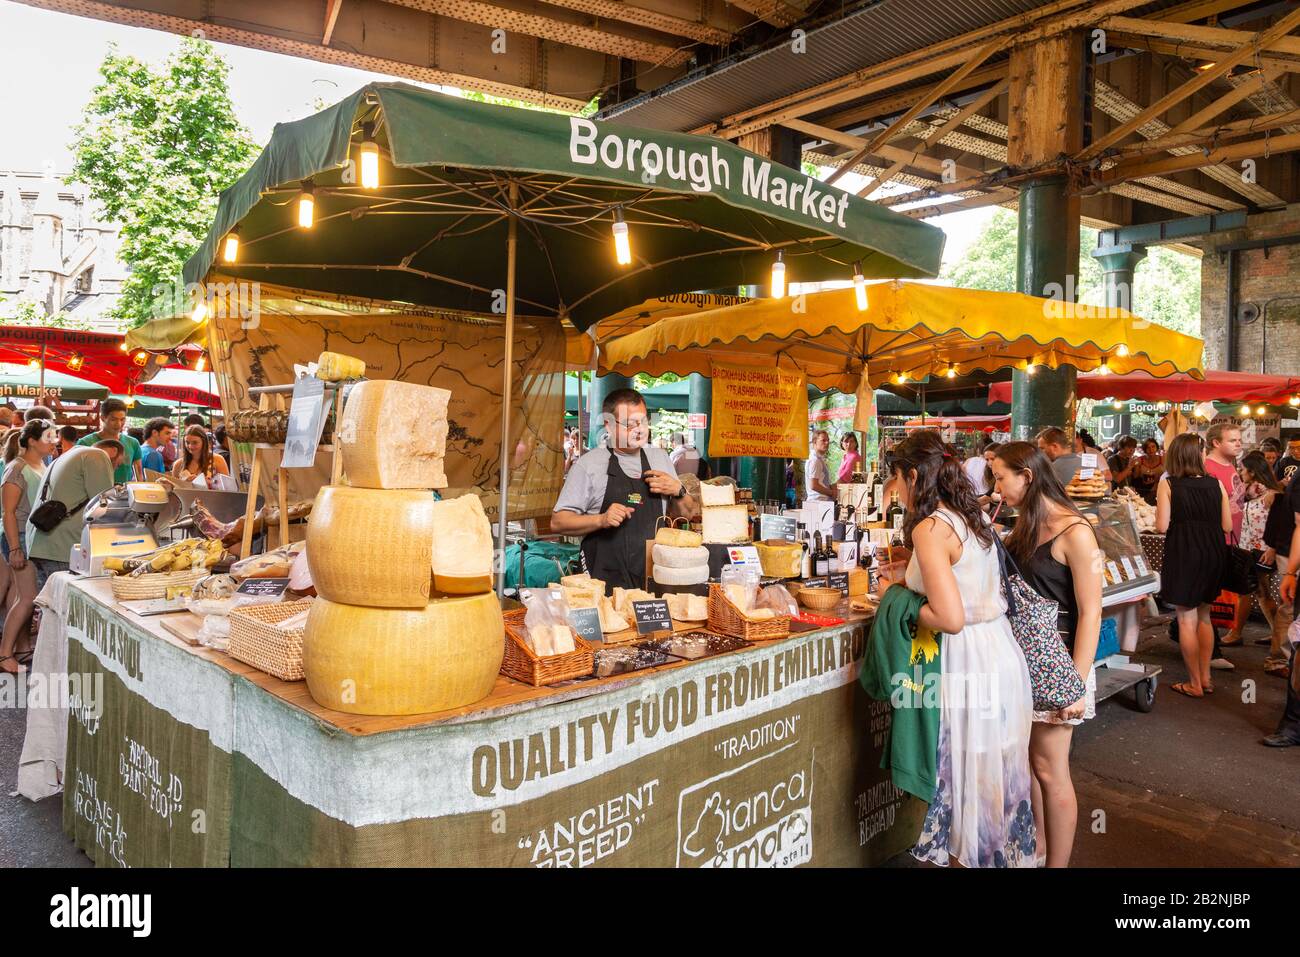 Borough Market cheese stall, London, UK Stock Photo